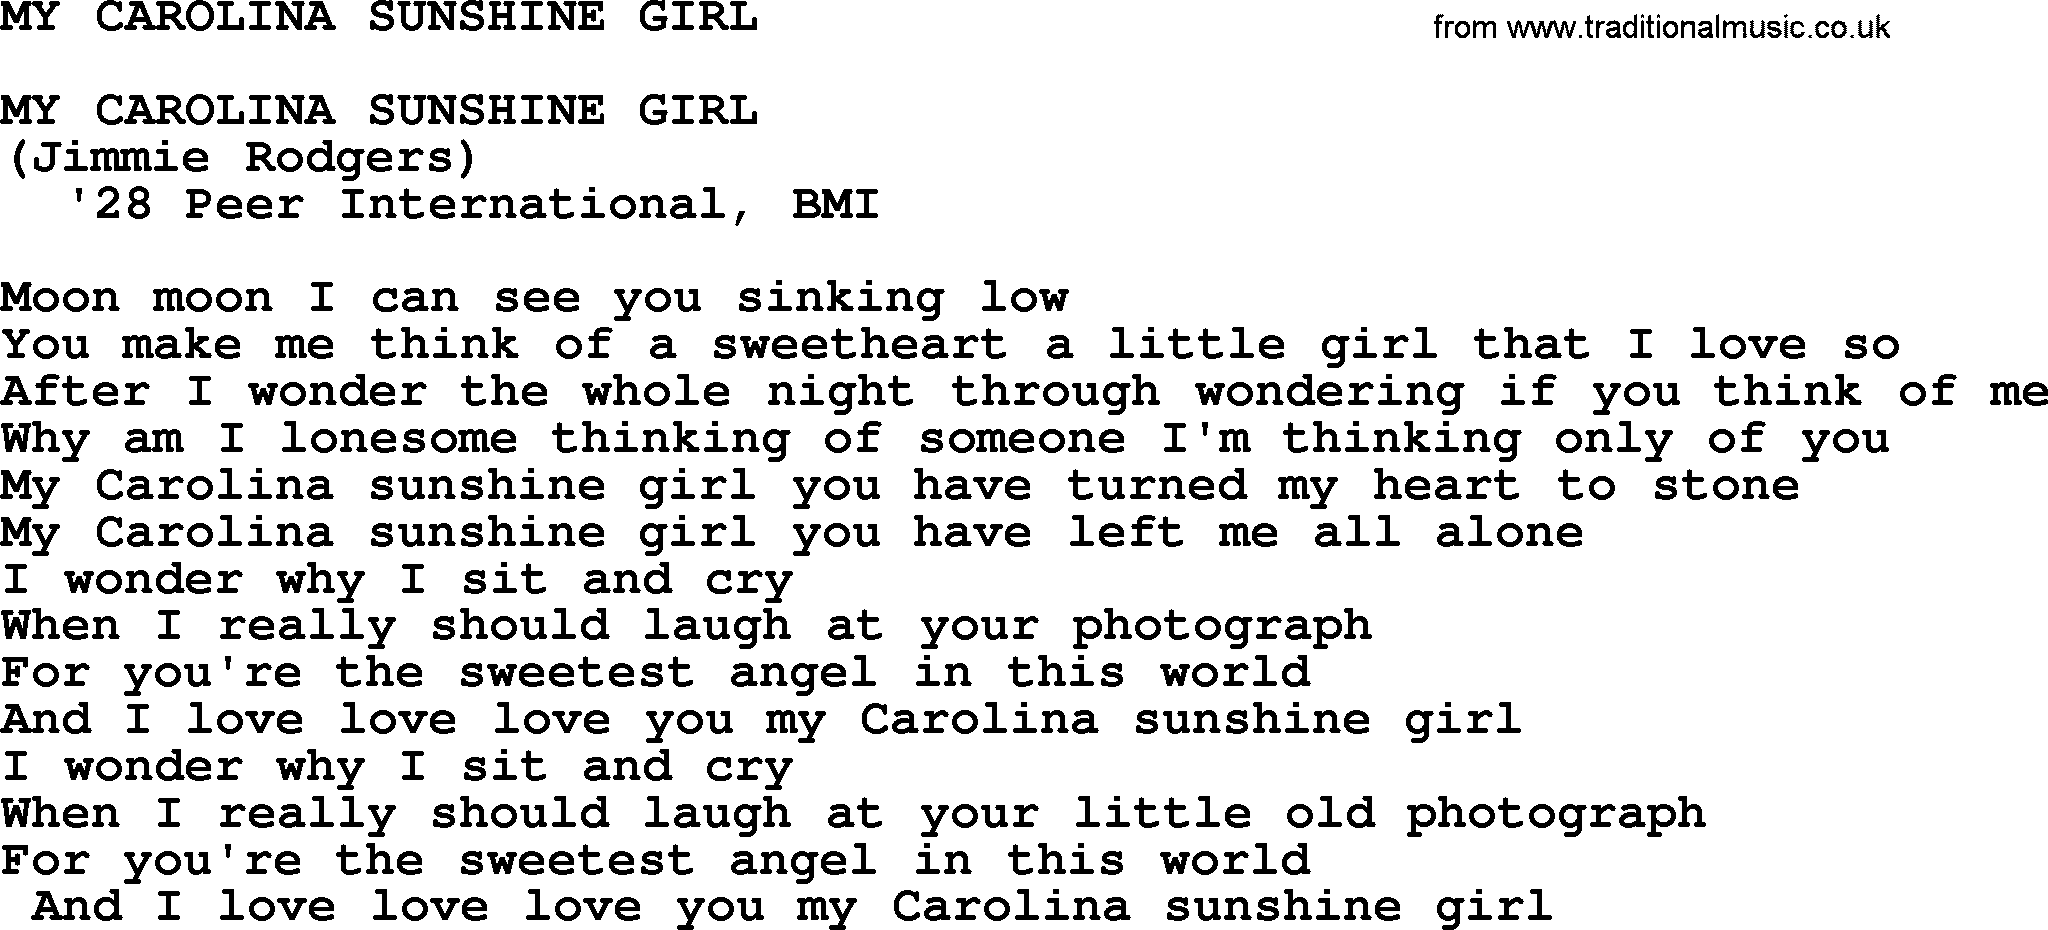 Merle Haggard song: My Carolina Sunshine Girl, lyrics.